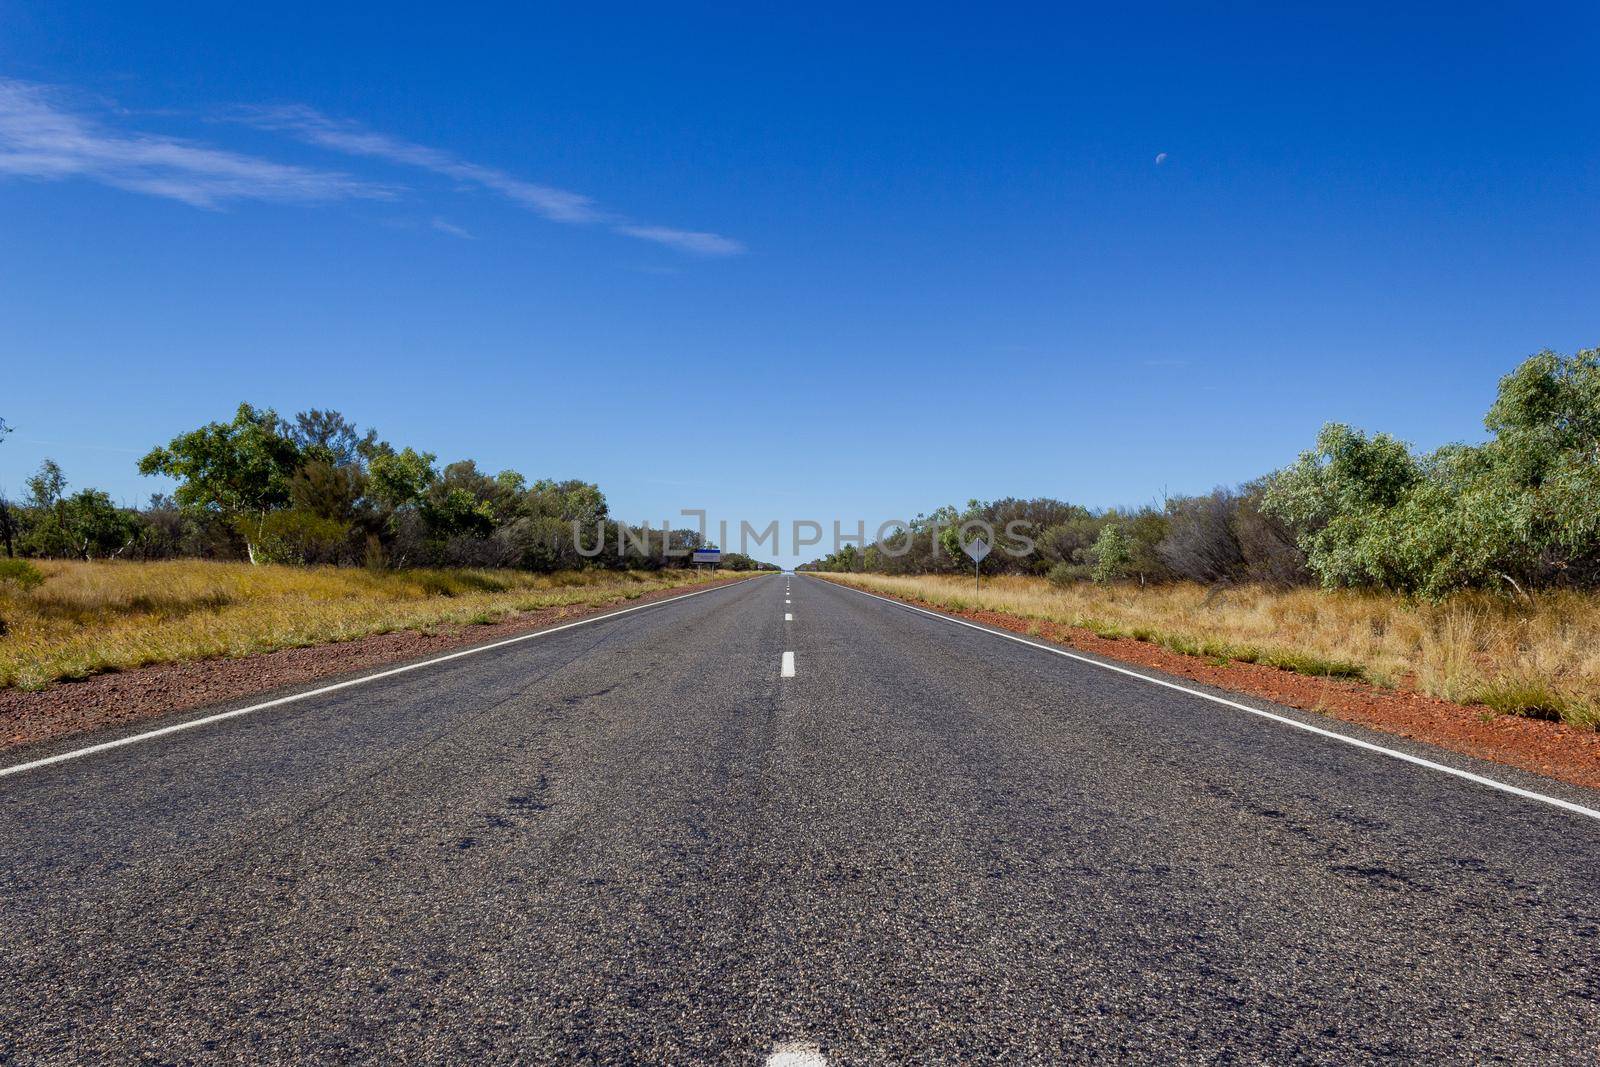 straight road through the dessert of Australia, South Australia, Stuart Highway Australia by bettercallcurry